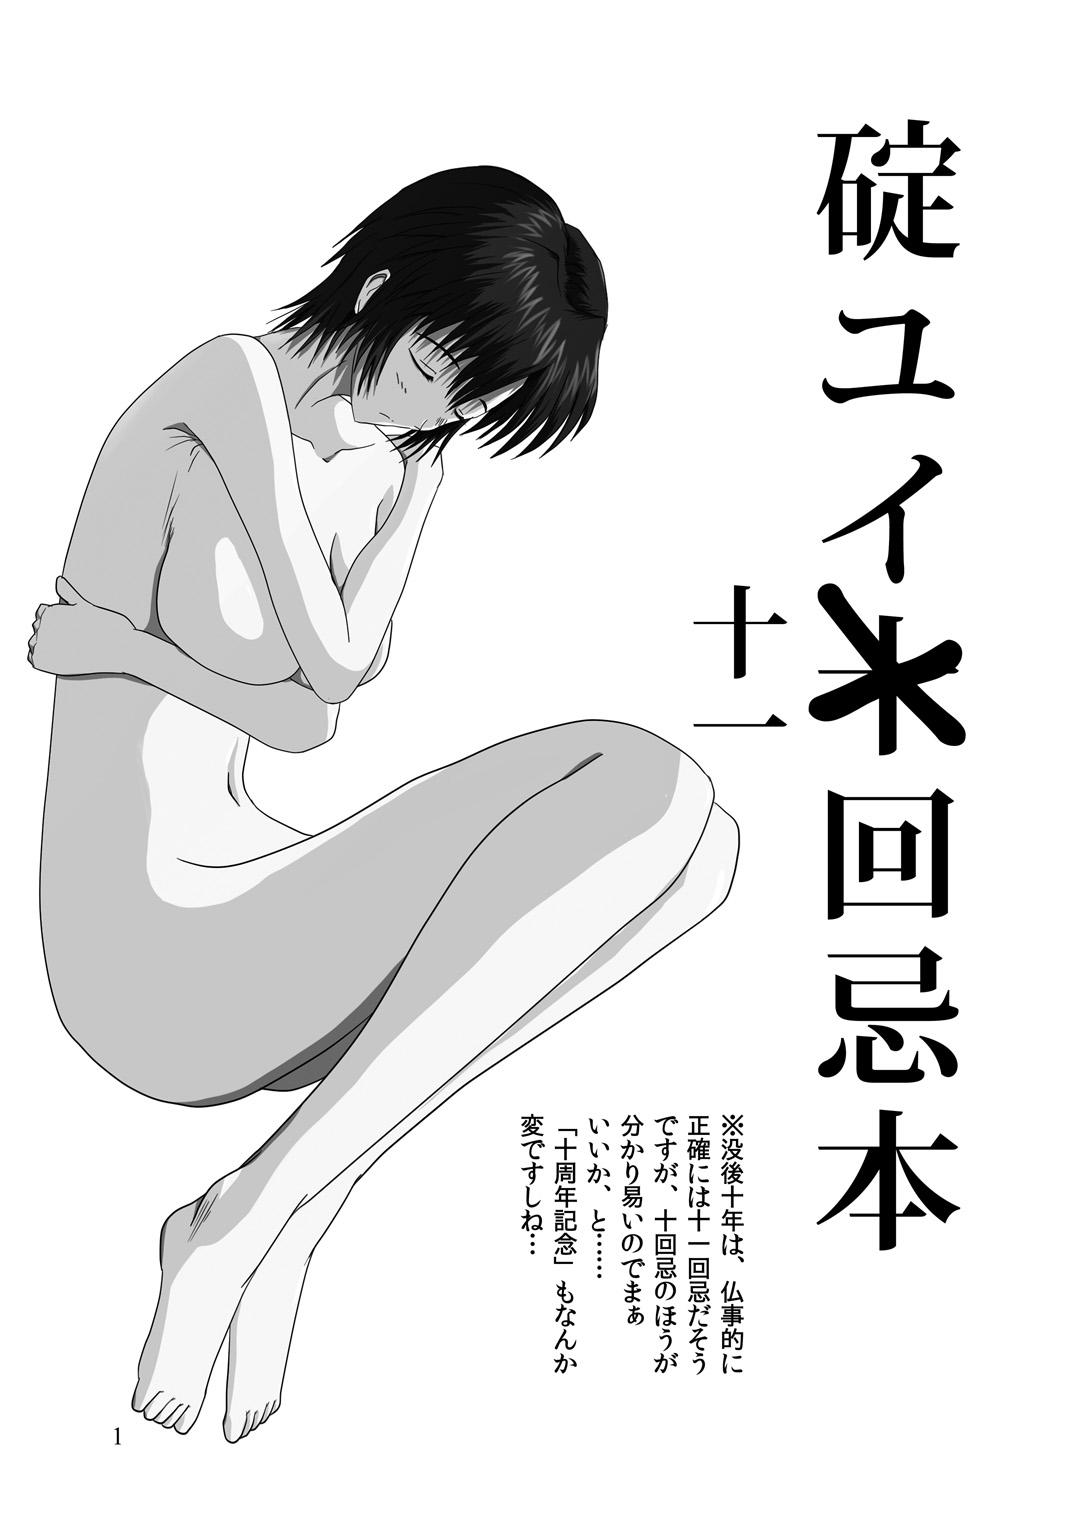 Motel Yui Ikari 10th Anniversary Book - beyond the time - Neon genesis evangelion Massage - Page 2